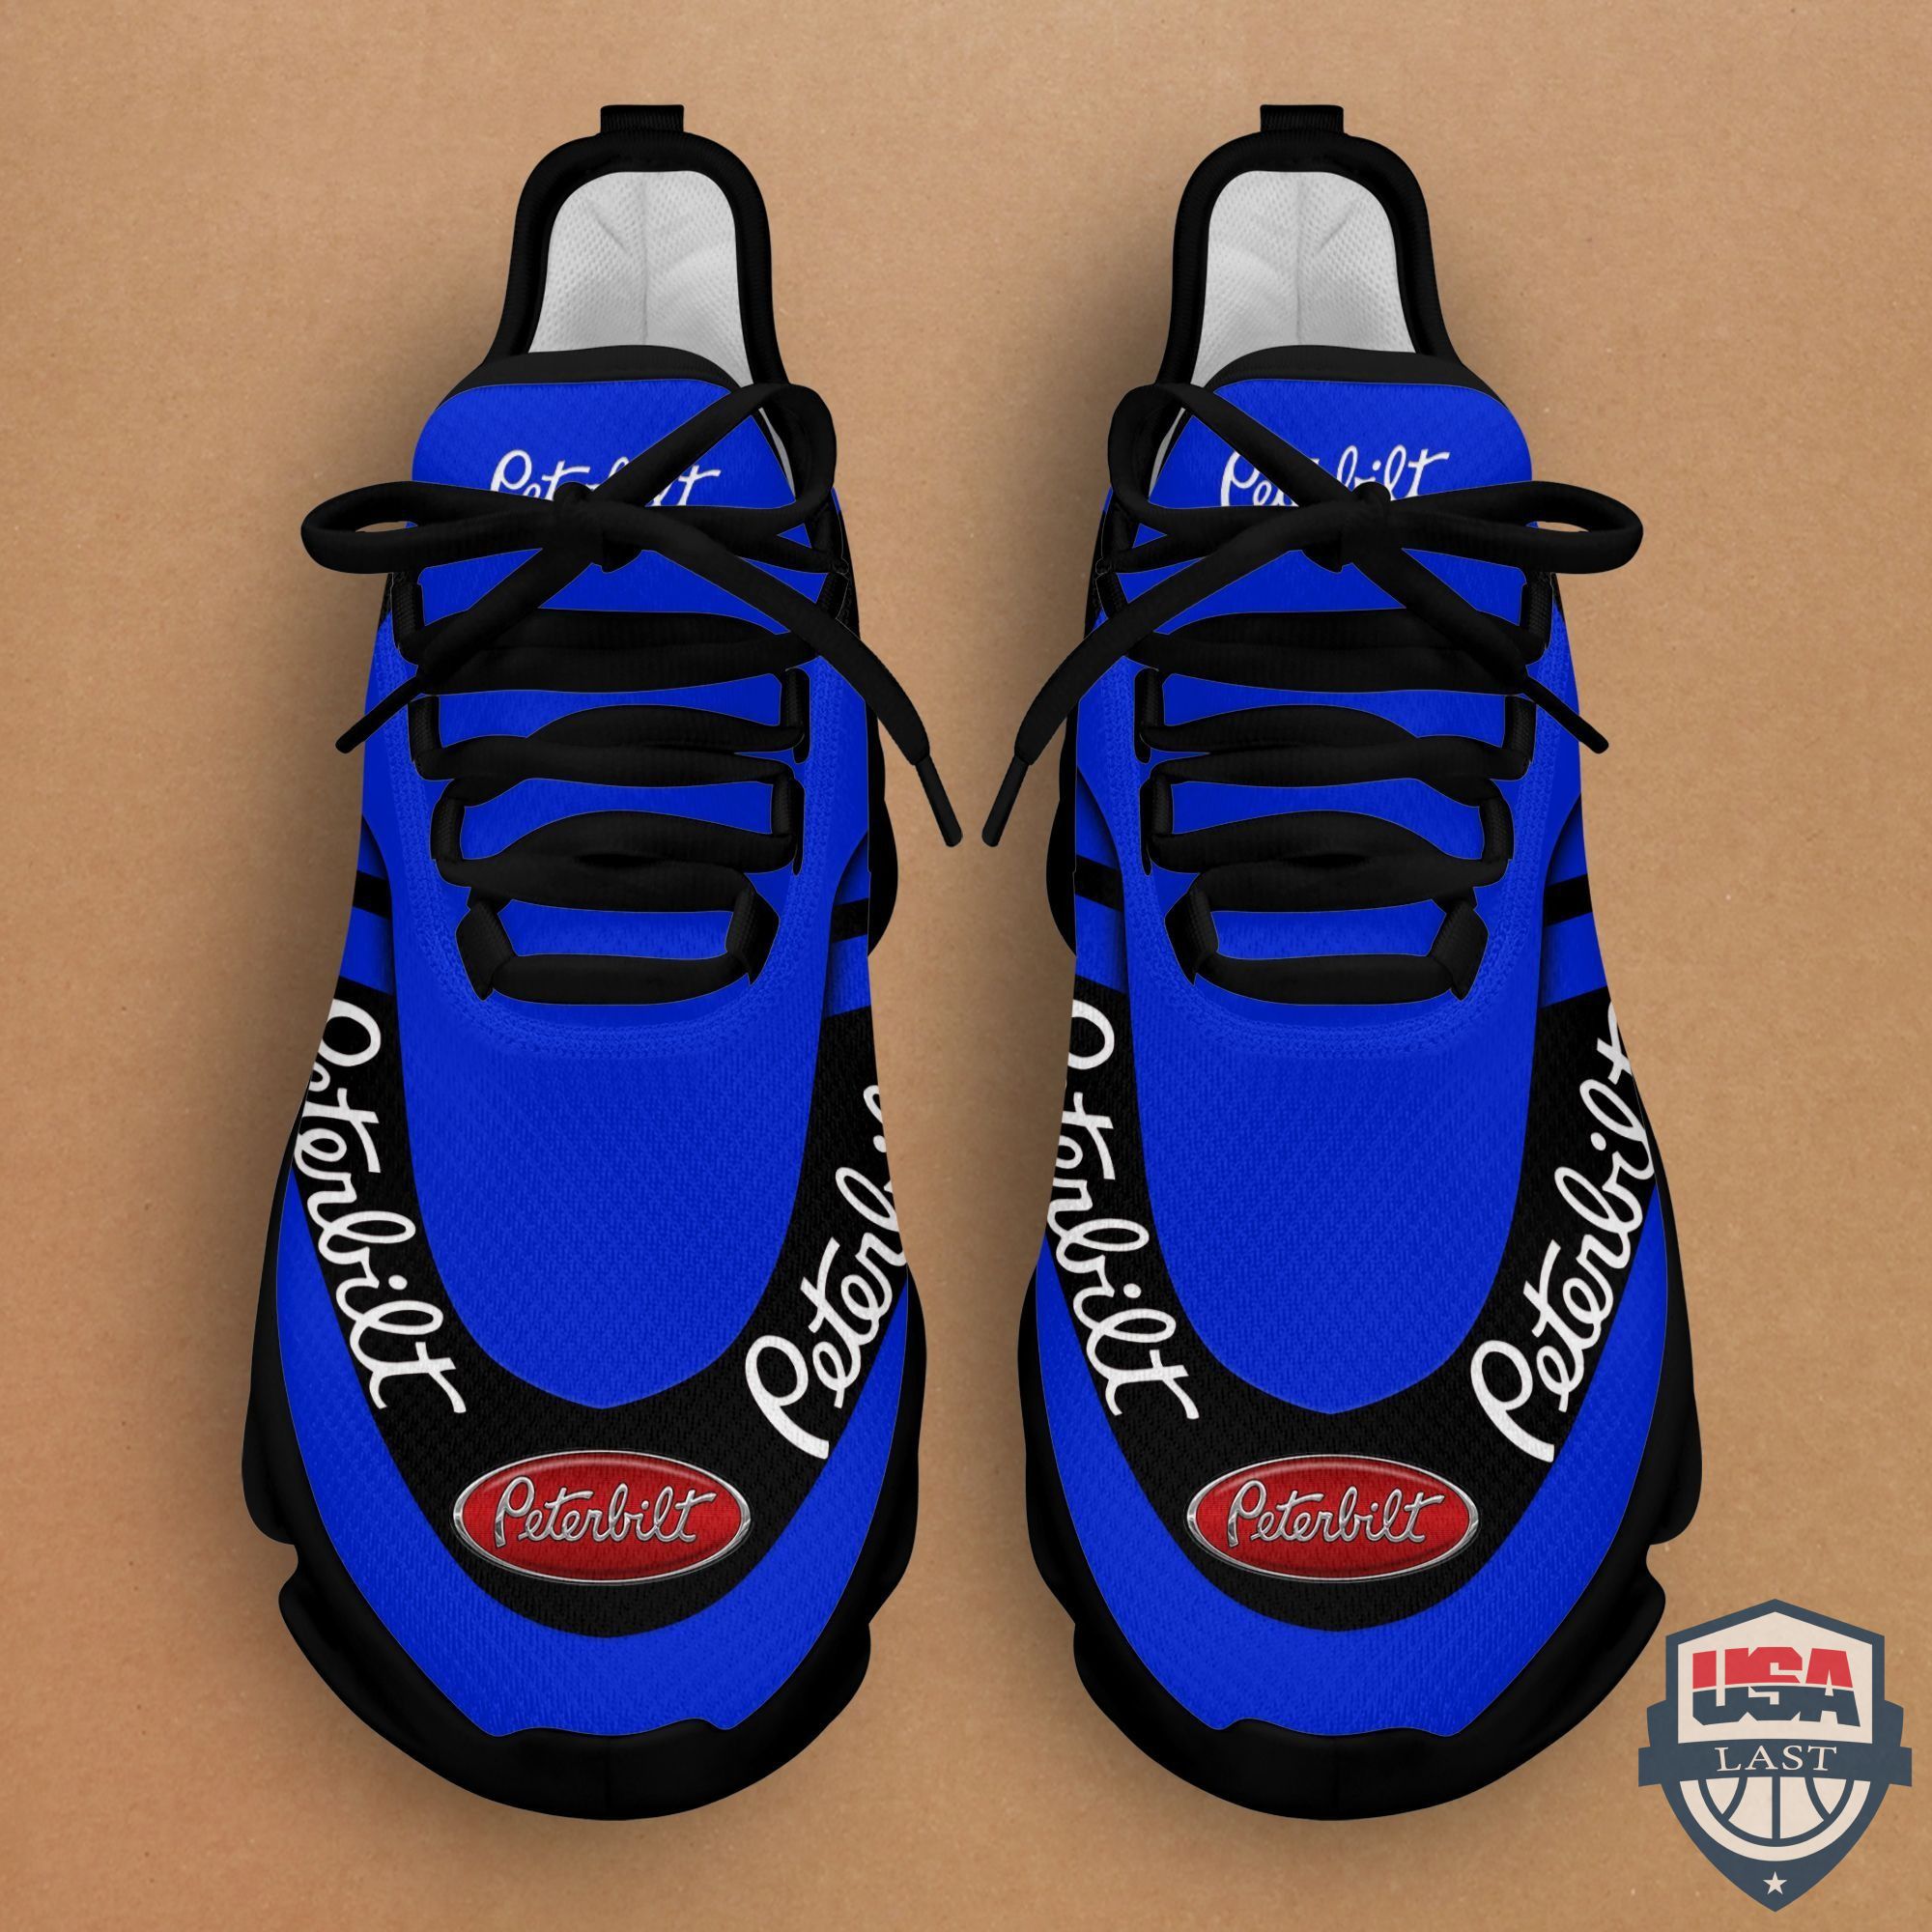 Peterbilt Motors Company Running Shoes Blue Version